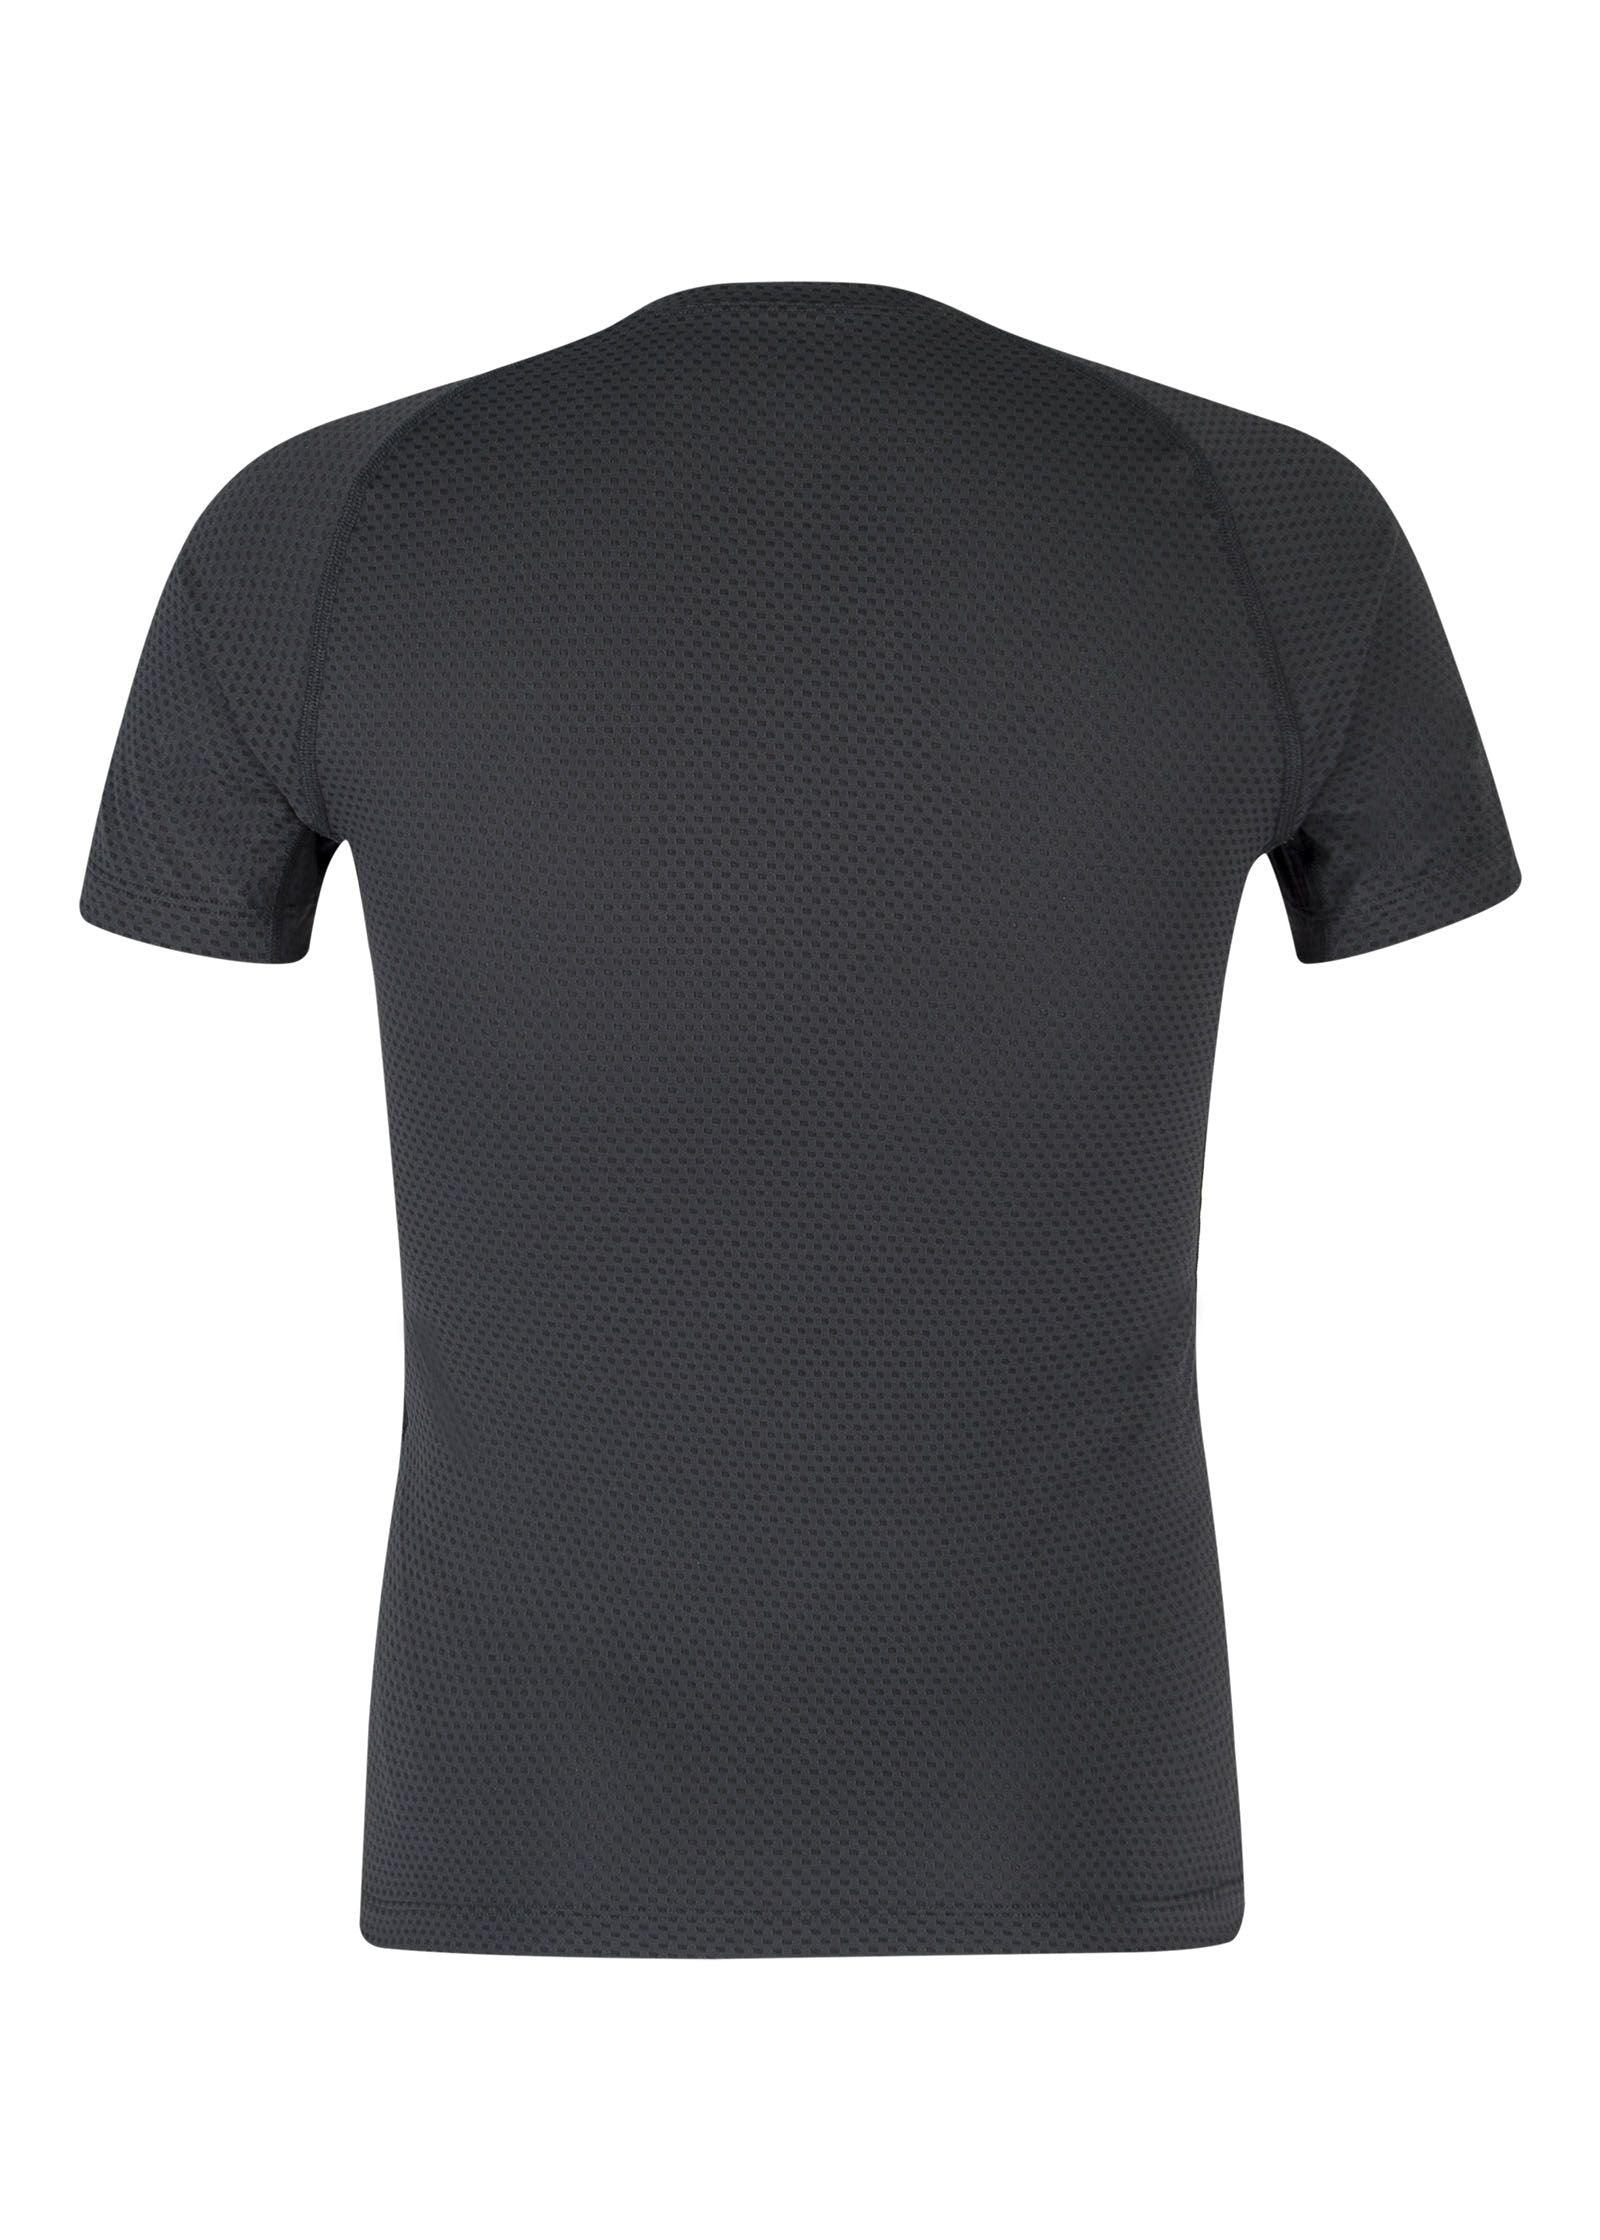 Montura | T-shirt Soft Dry 2 Uomo Ardesia/Nero - Fabbrica Ski Sises